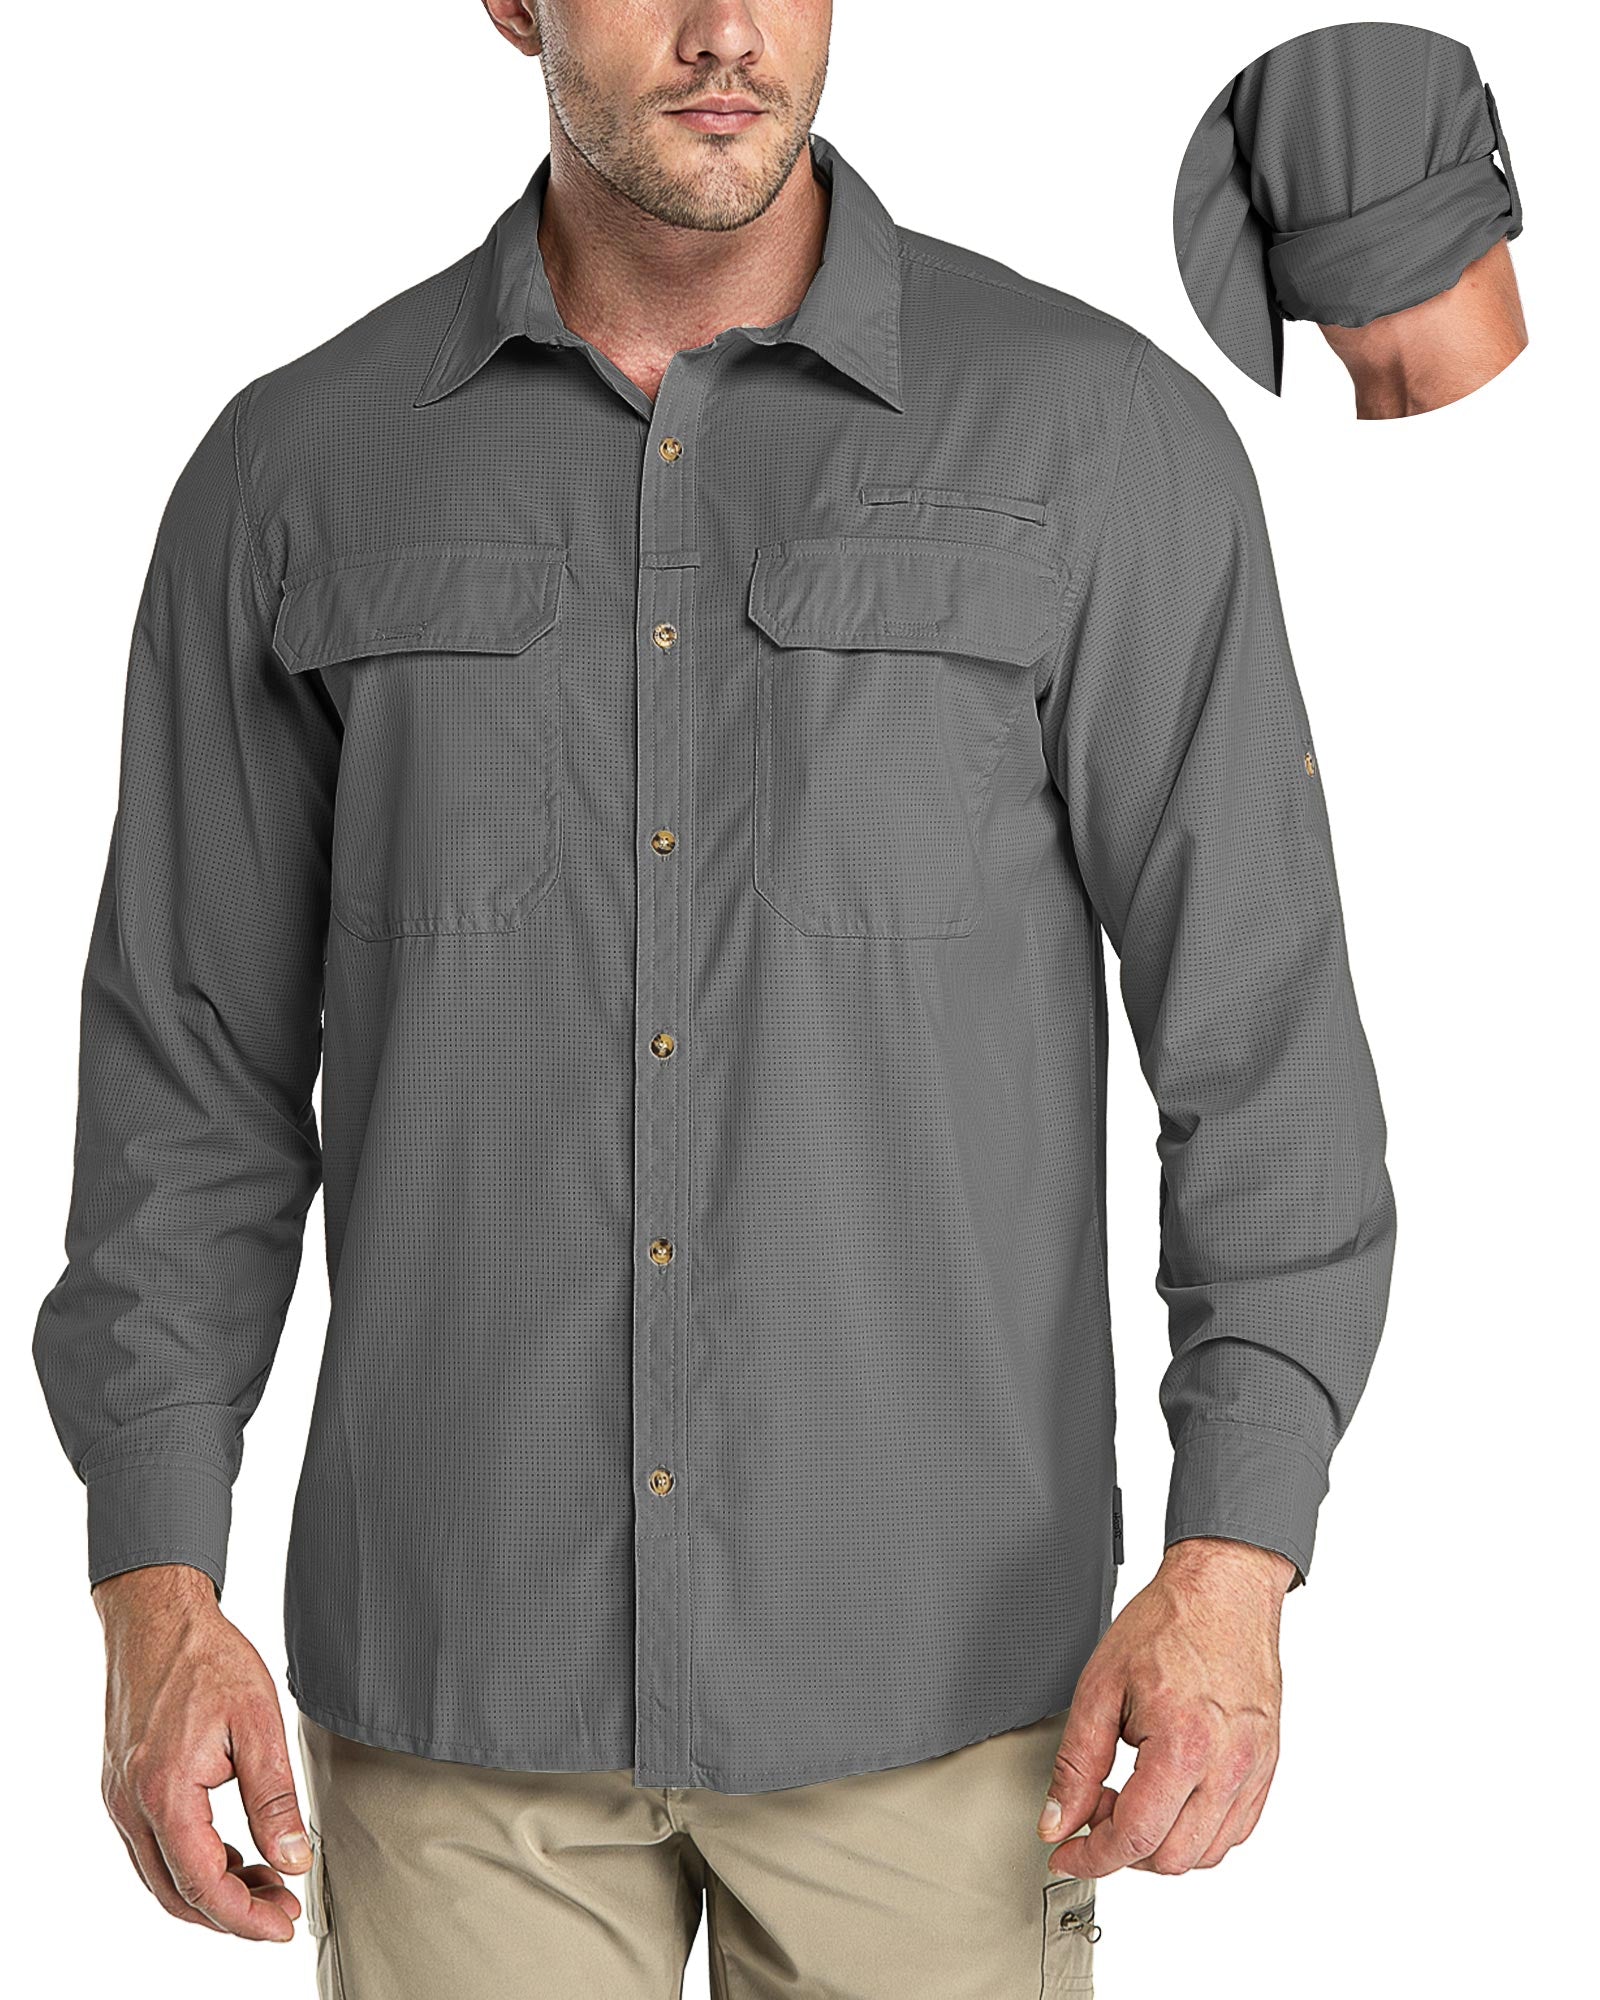  Mens UPF 50+ UV Sun Protection SPF Hiking Shirt Long Sleeve  Lightweight Quick Dry For Safari Travel Fishing